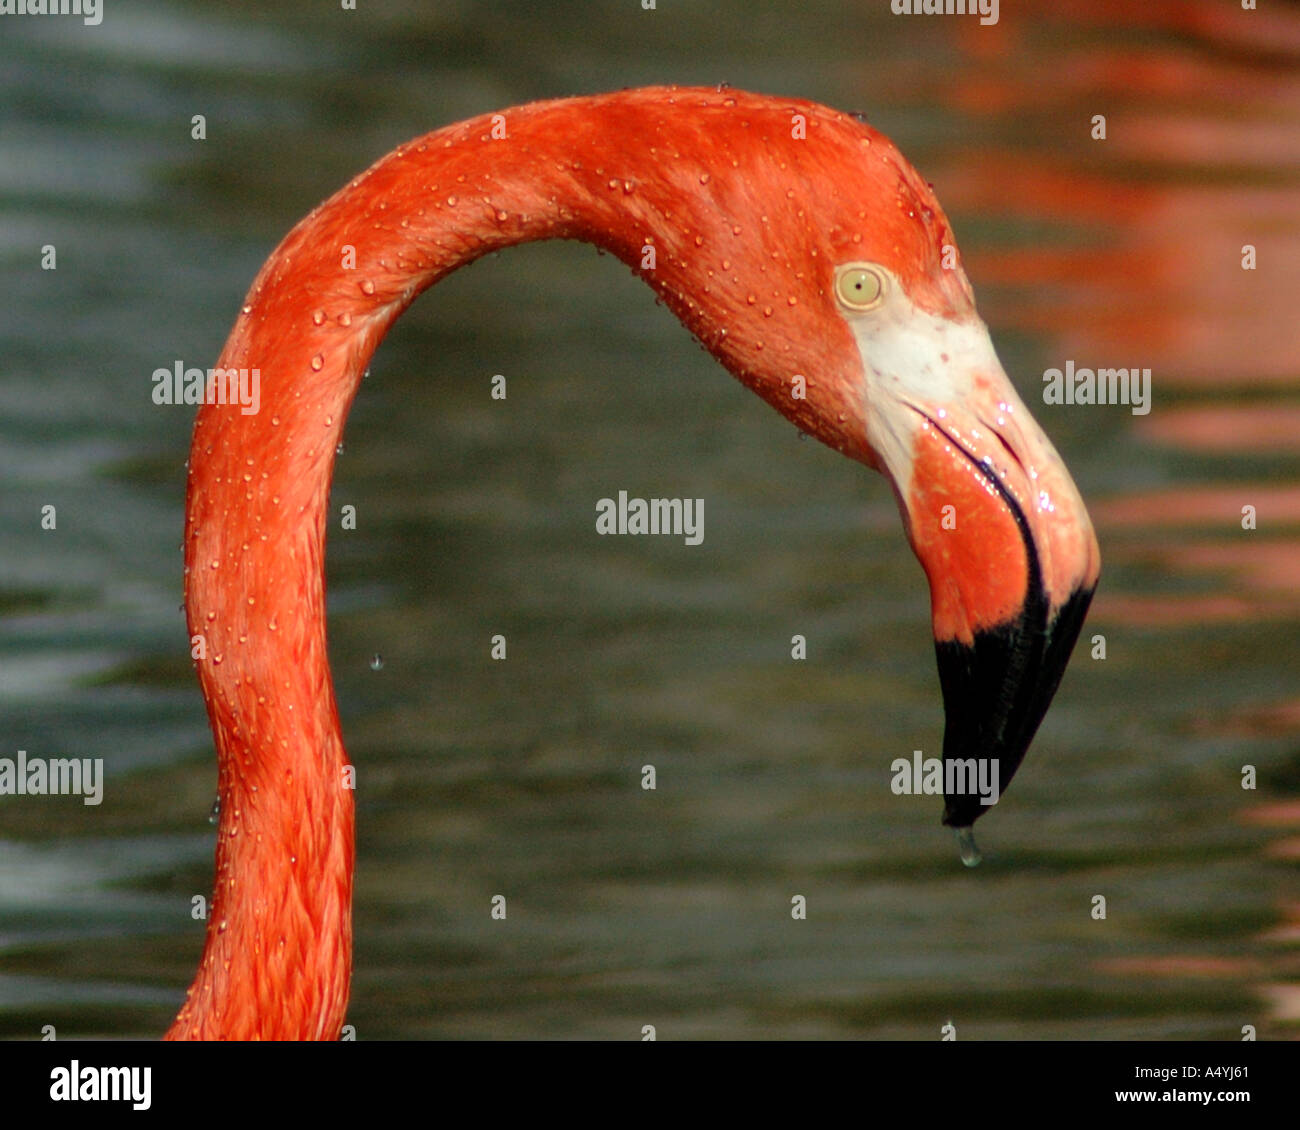 Head and beak shot of a Flamingo Stock Photo